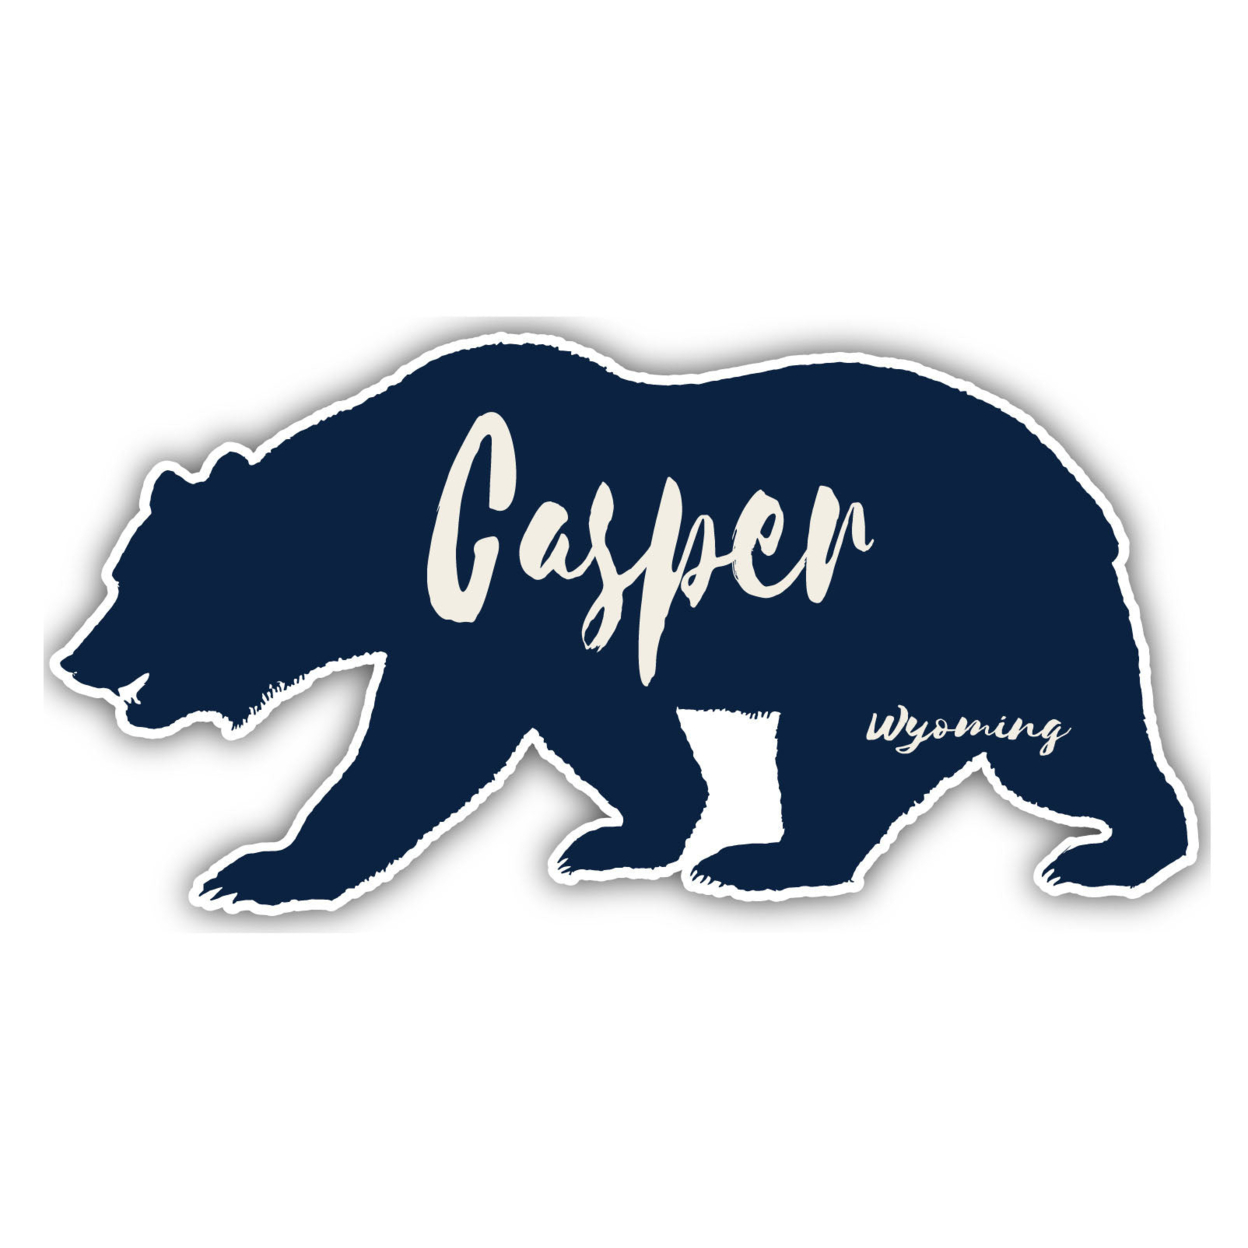 Casper Wyoming Souvenir Decorative Stickers (Choose Theme And Size) - Single Unit, 12-Inch, Bear